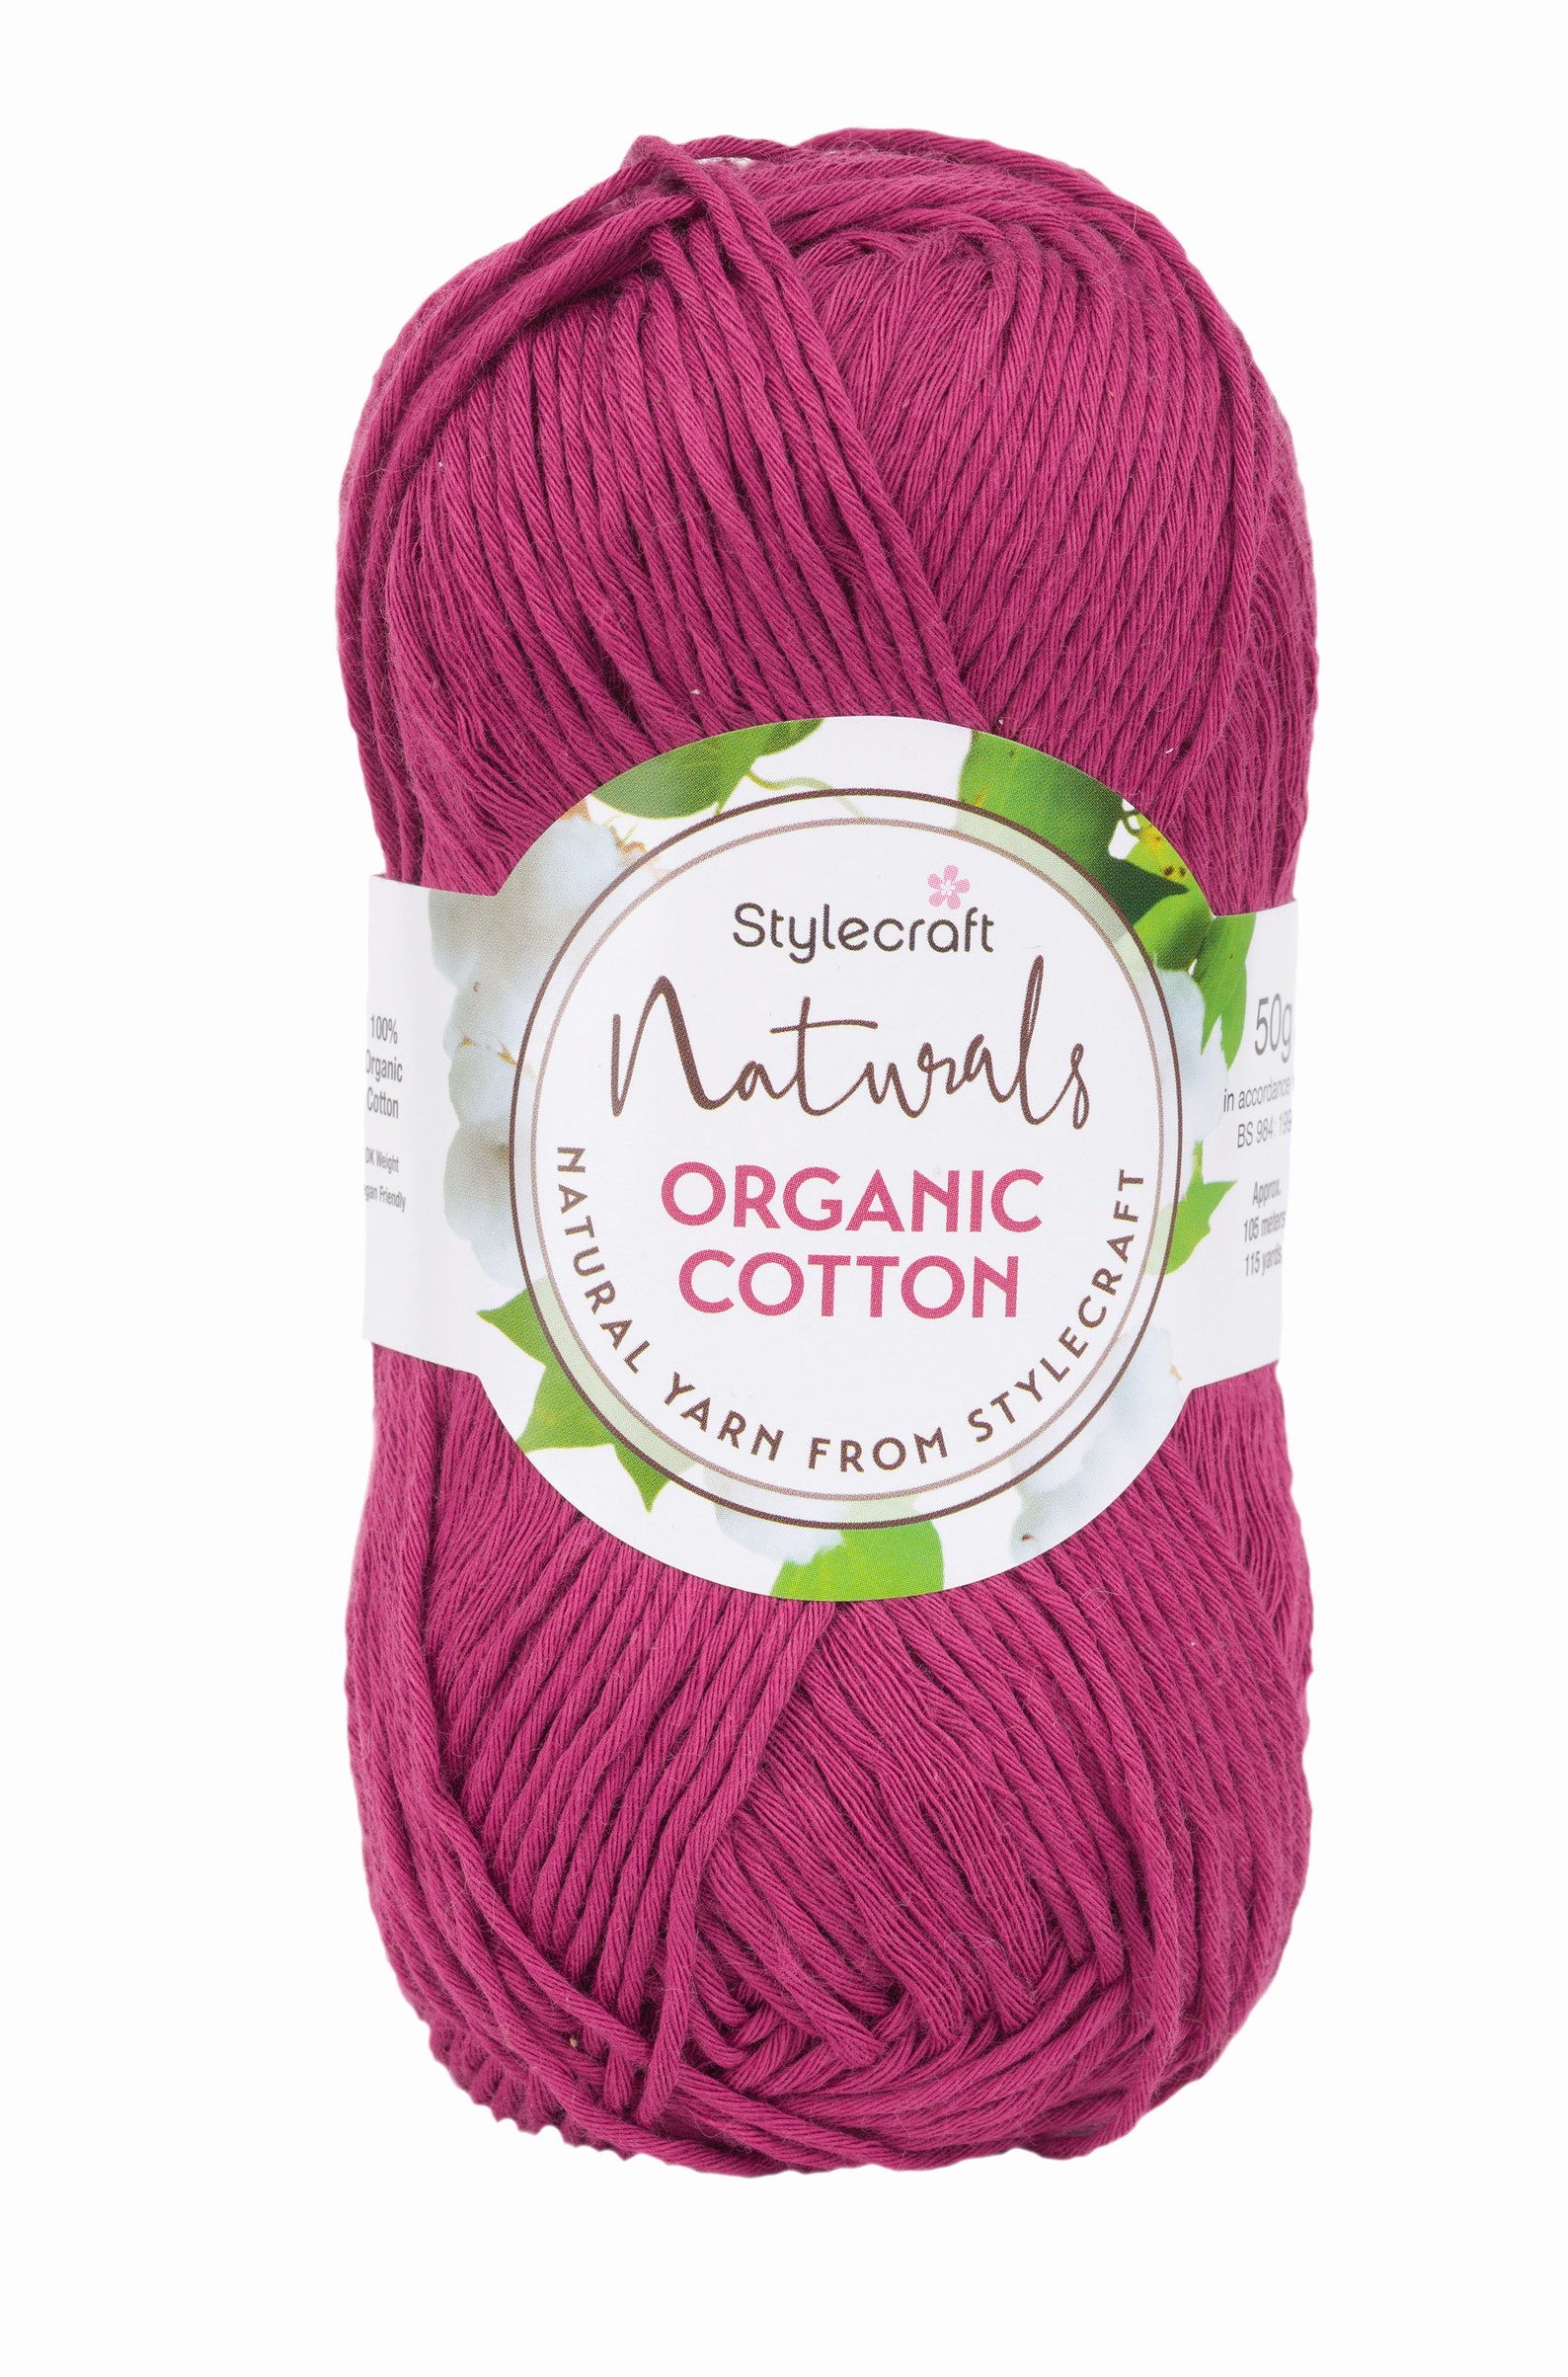 Stylecraft Naturals Organic Cotton DK 50g Knitting Crochet - Etsy UK